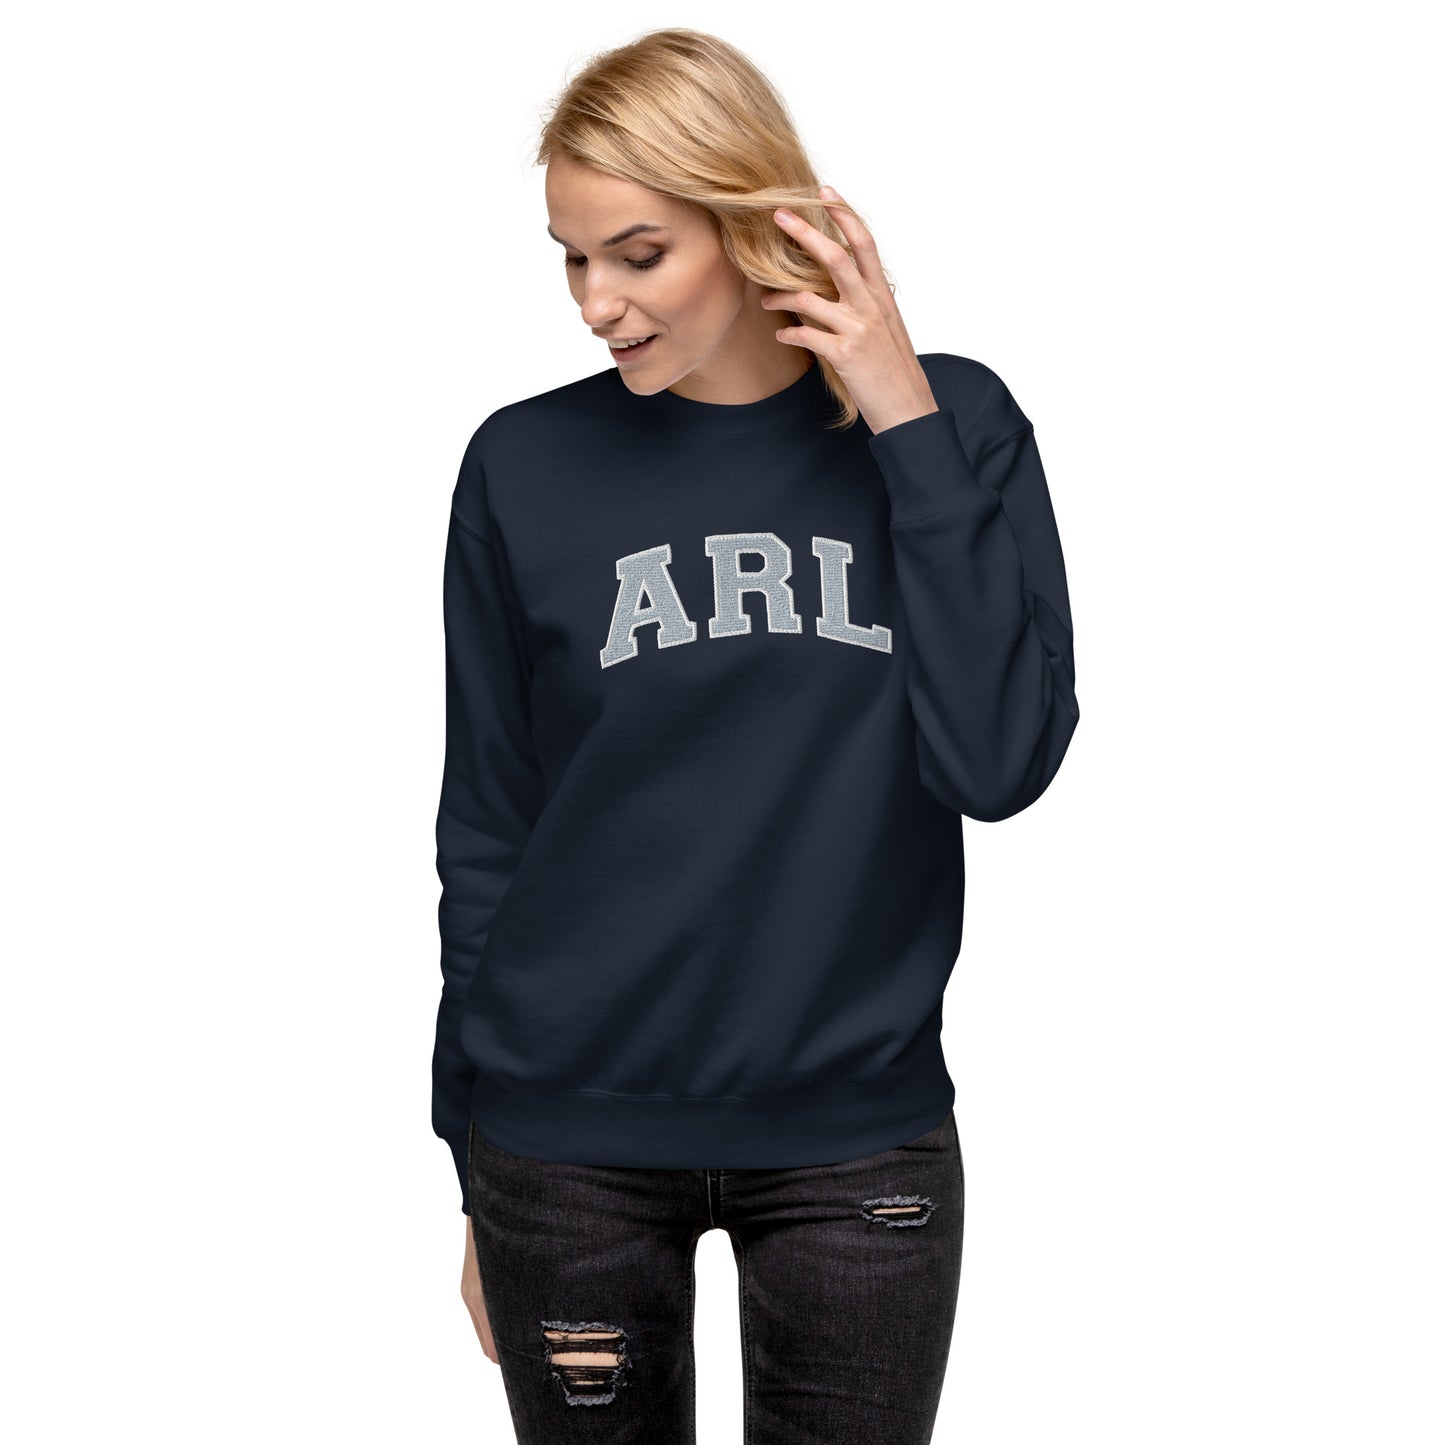 ARL crewneck sweatshirt (embroidered)